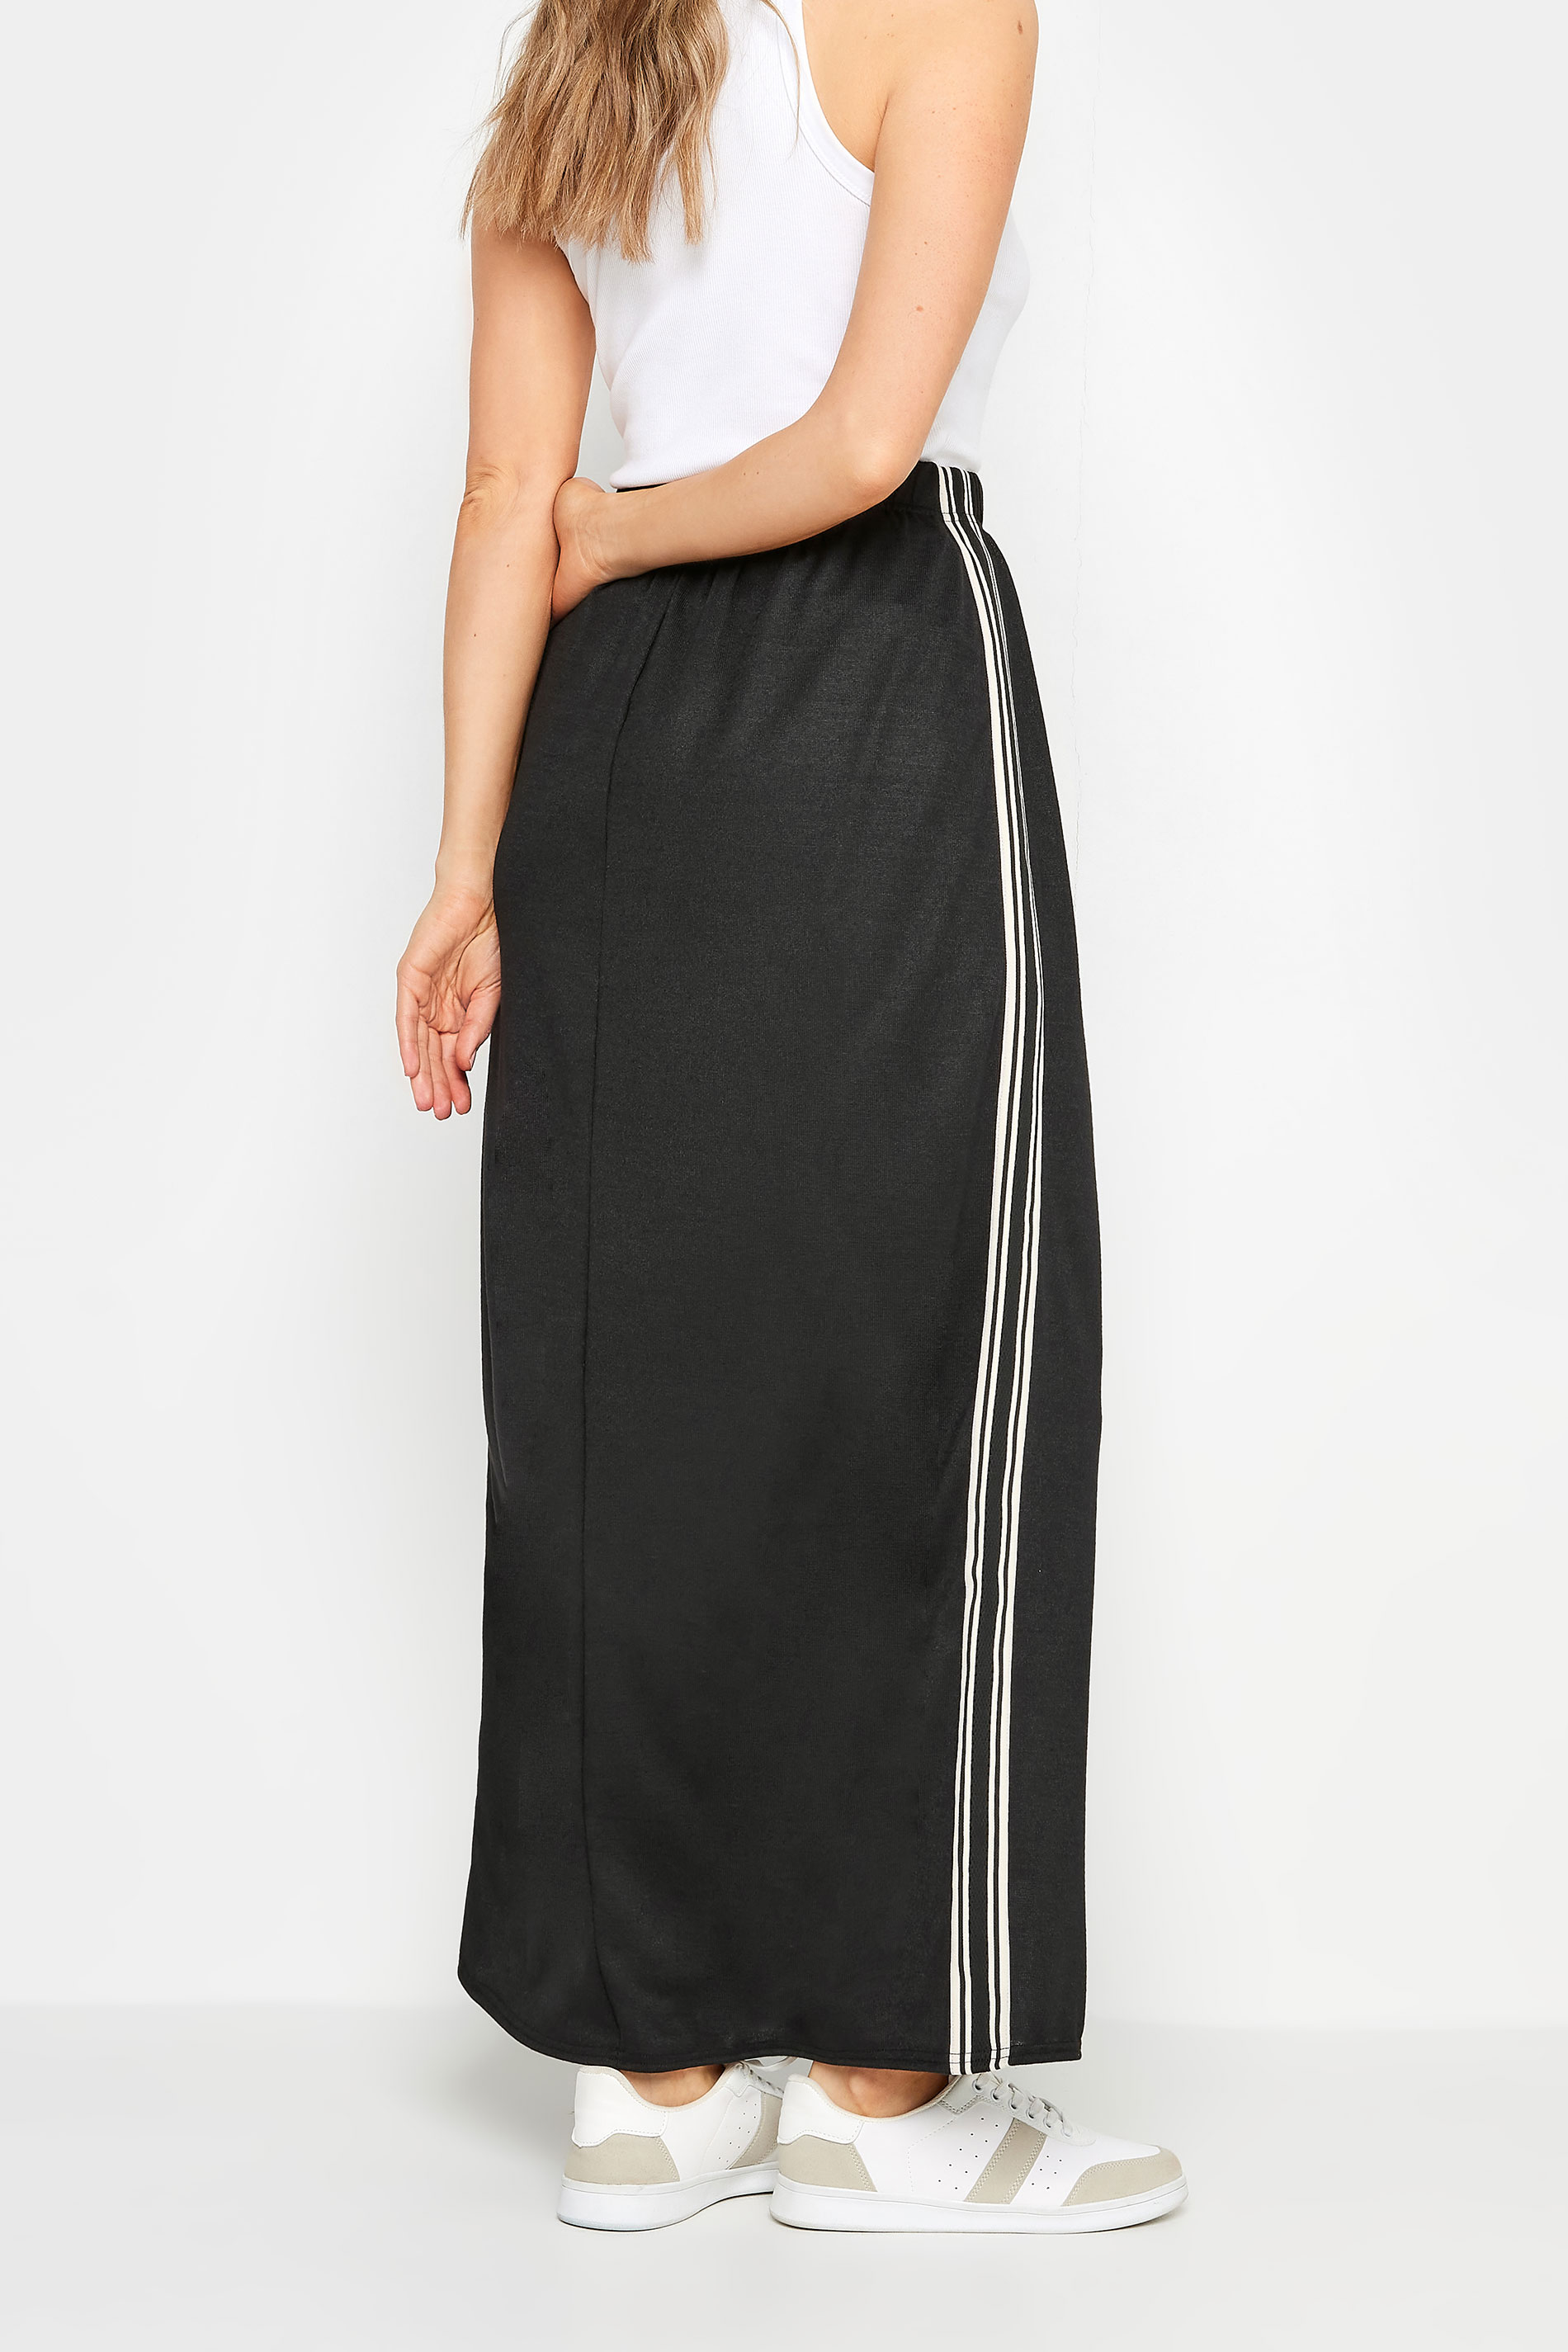 LTS Tall Black Side Stripe Panel Maxi Skirt | Long Tall Sally 3